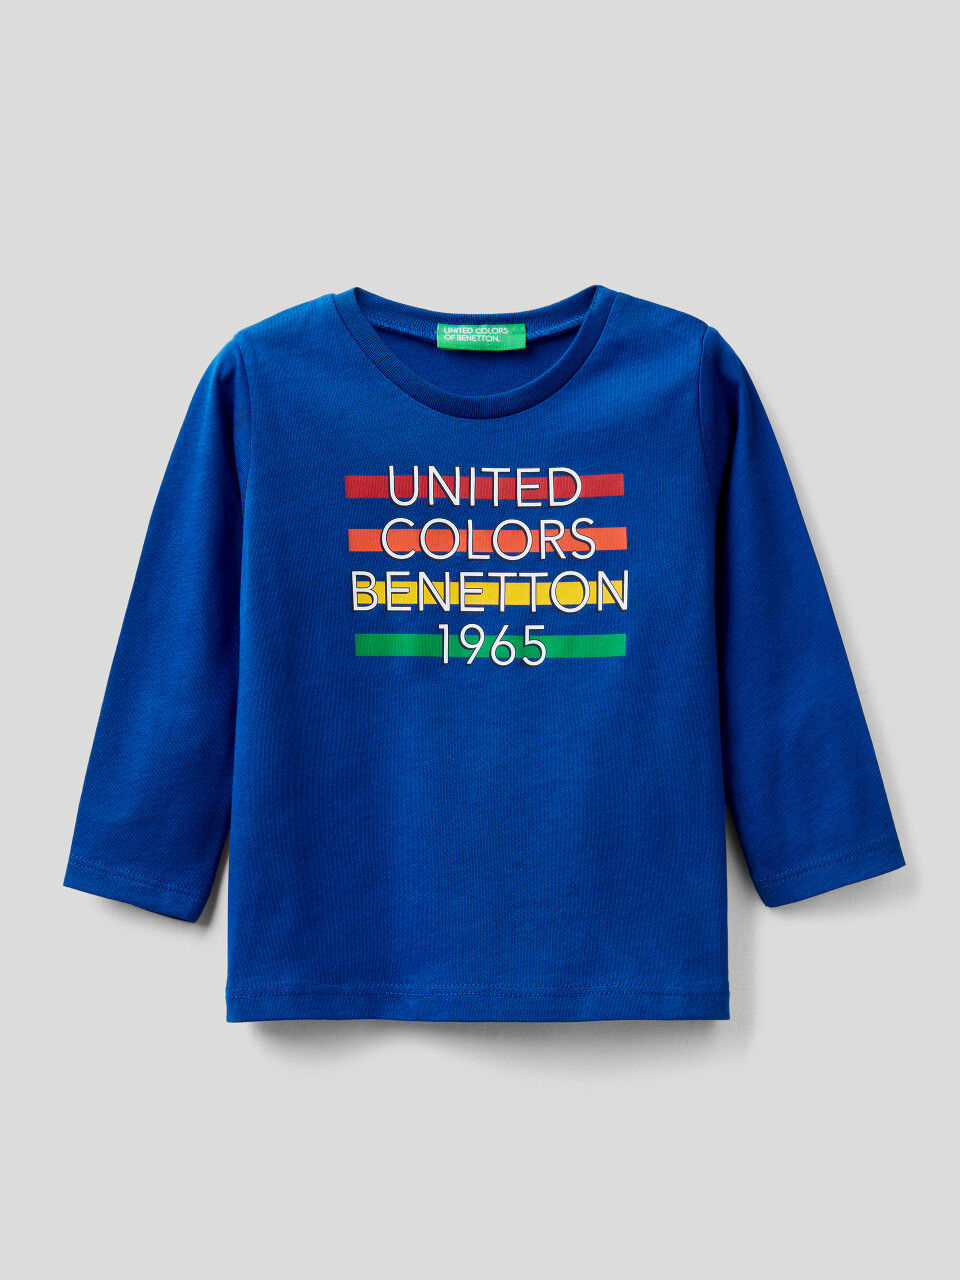 United Colors of Benetton Camiseta para Bebés